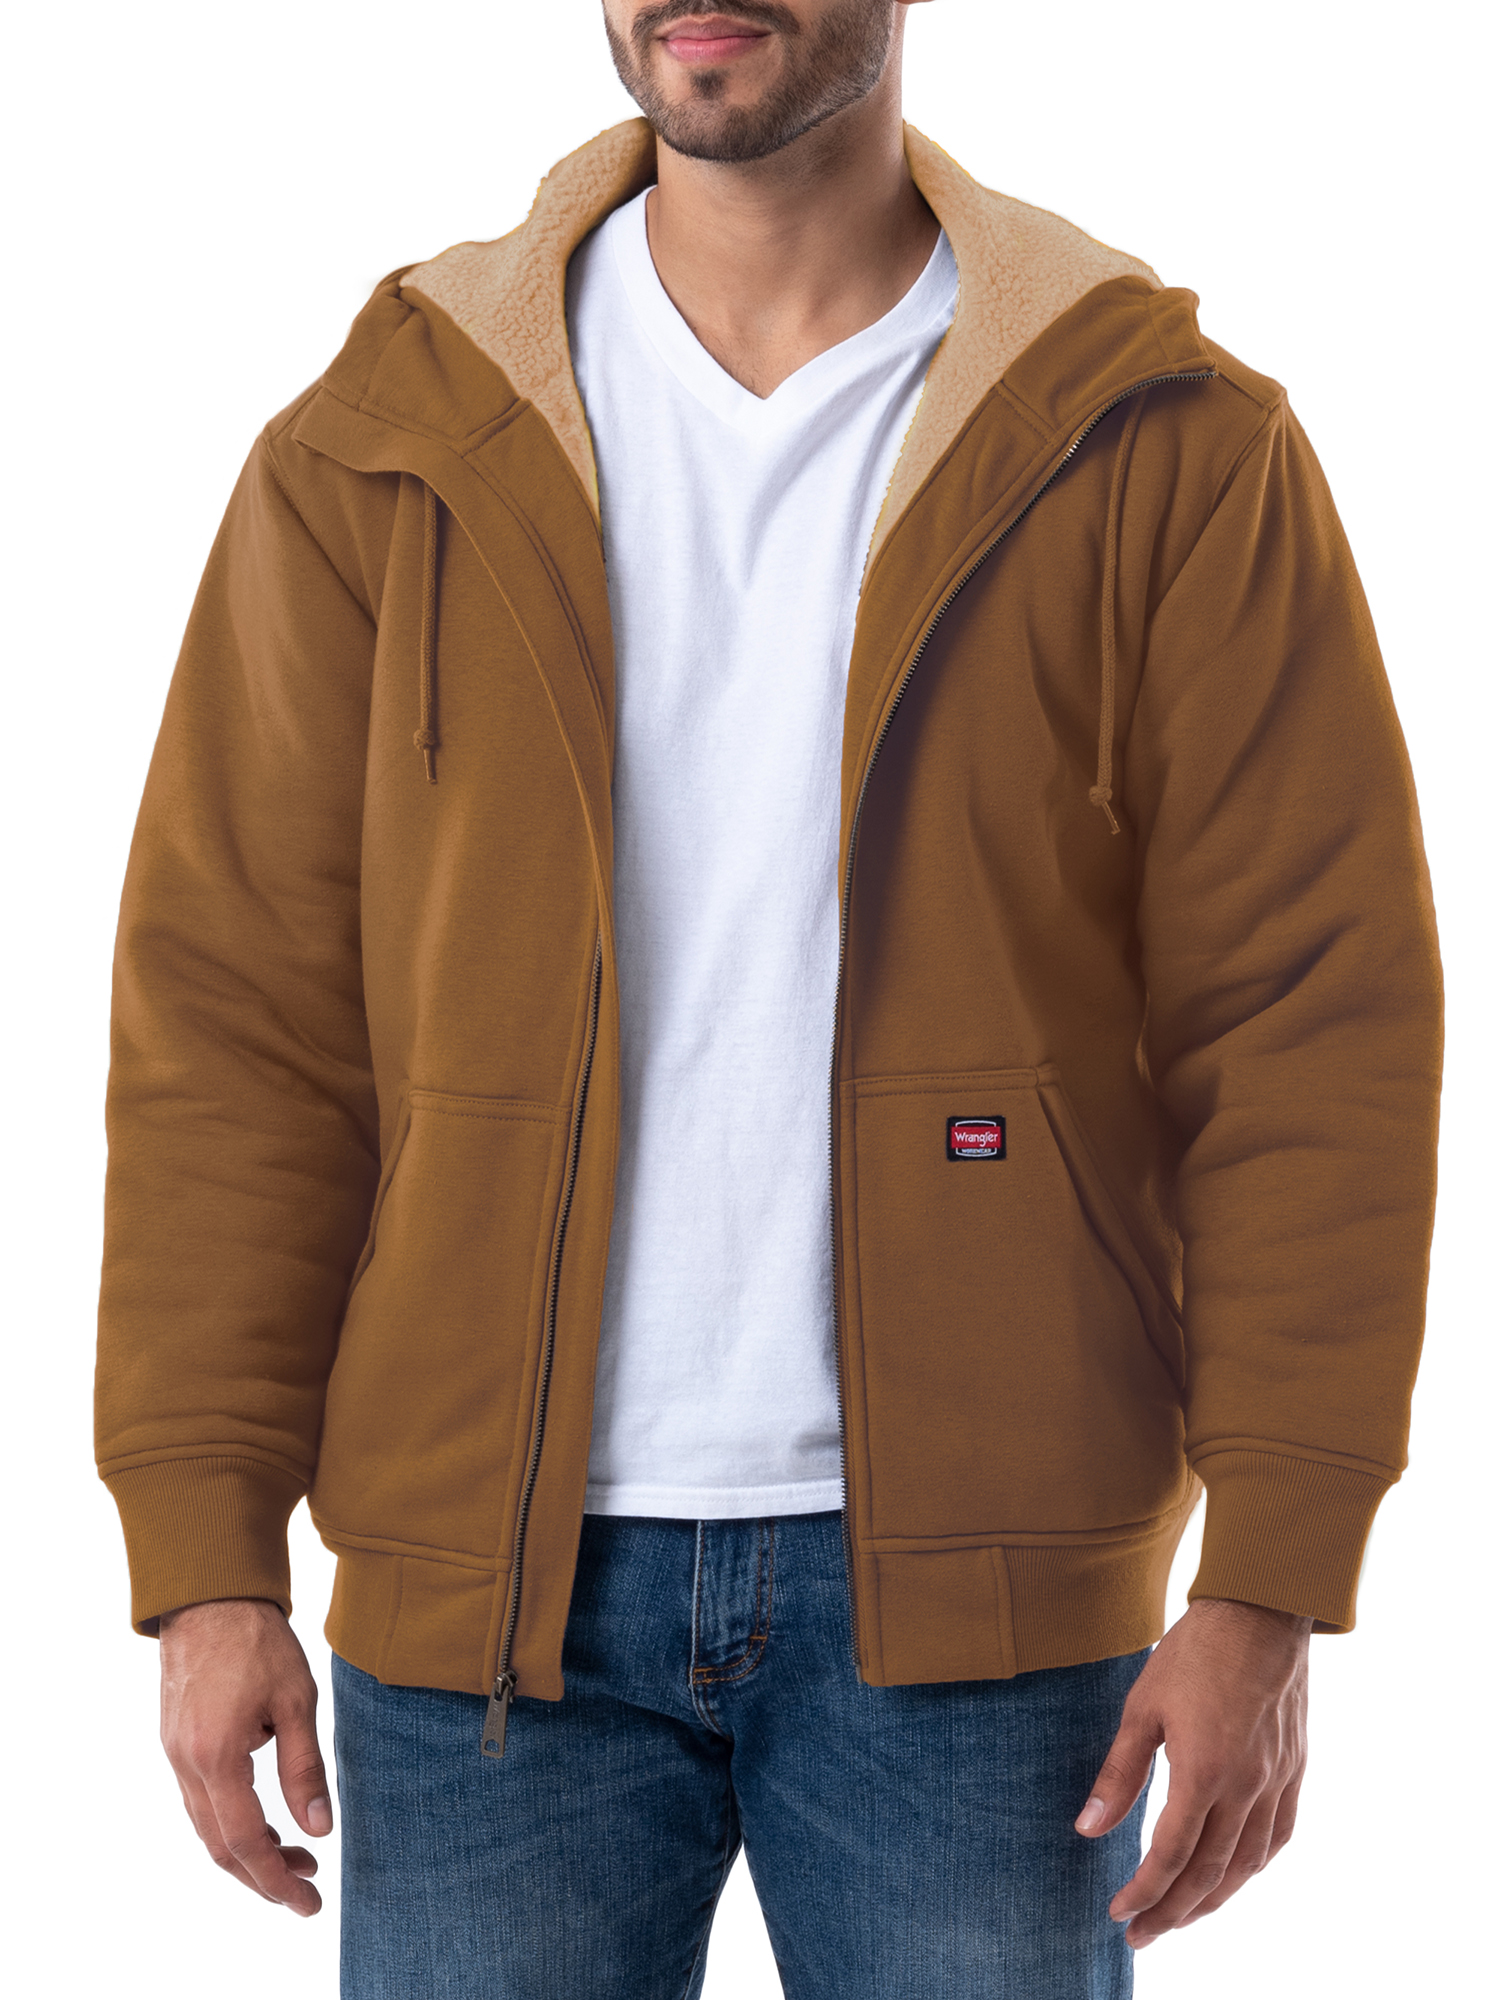 Wrangler Workwear Men's & Big Men's Full Zip Sherpa Lined Hooded Sweatshirt, Sizes S-5XL - image 1 of 8